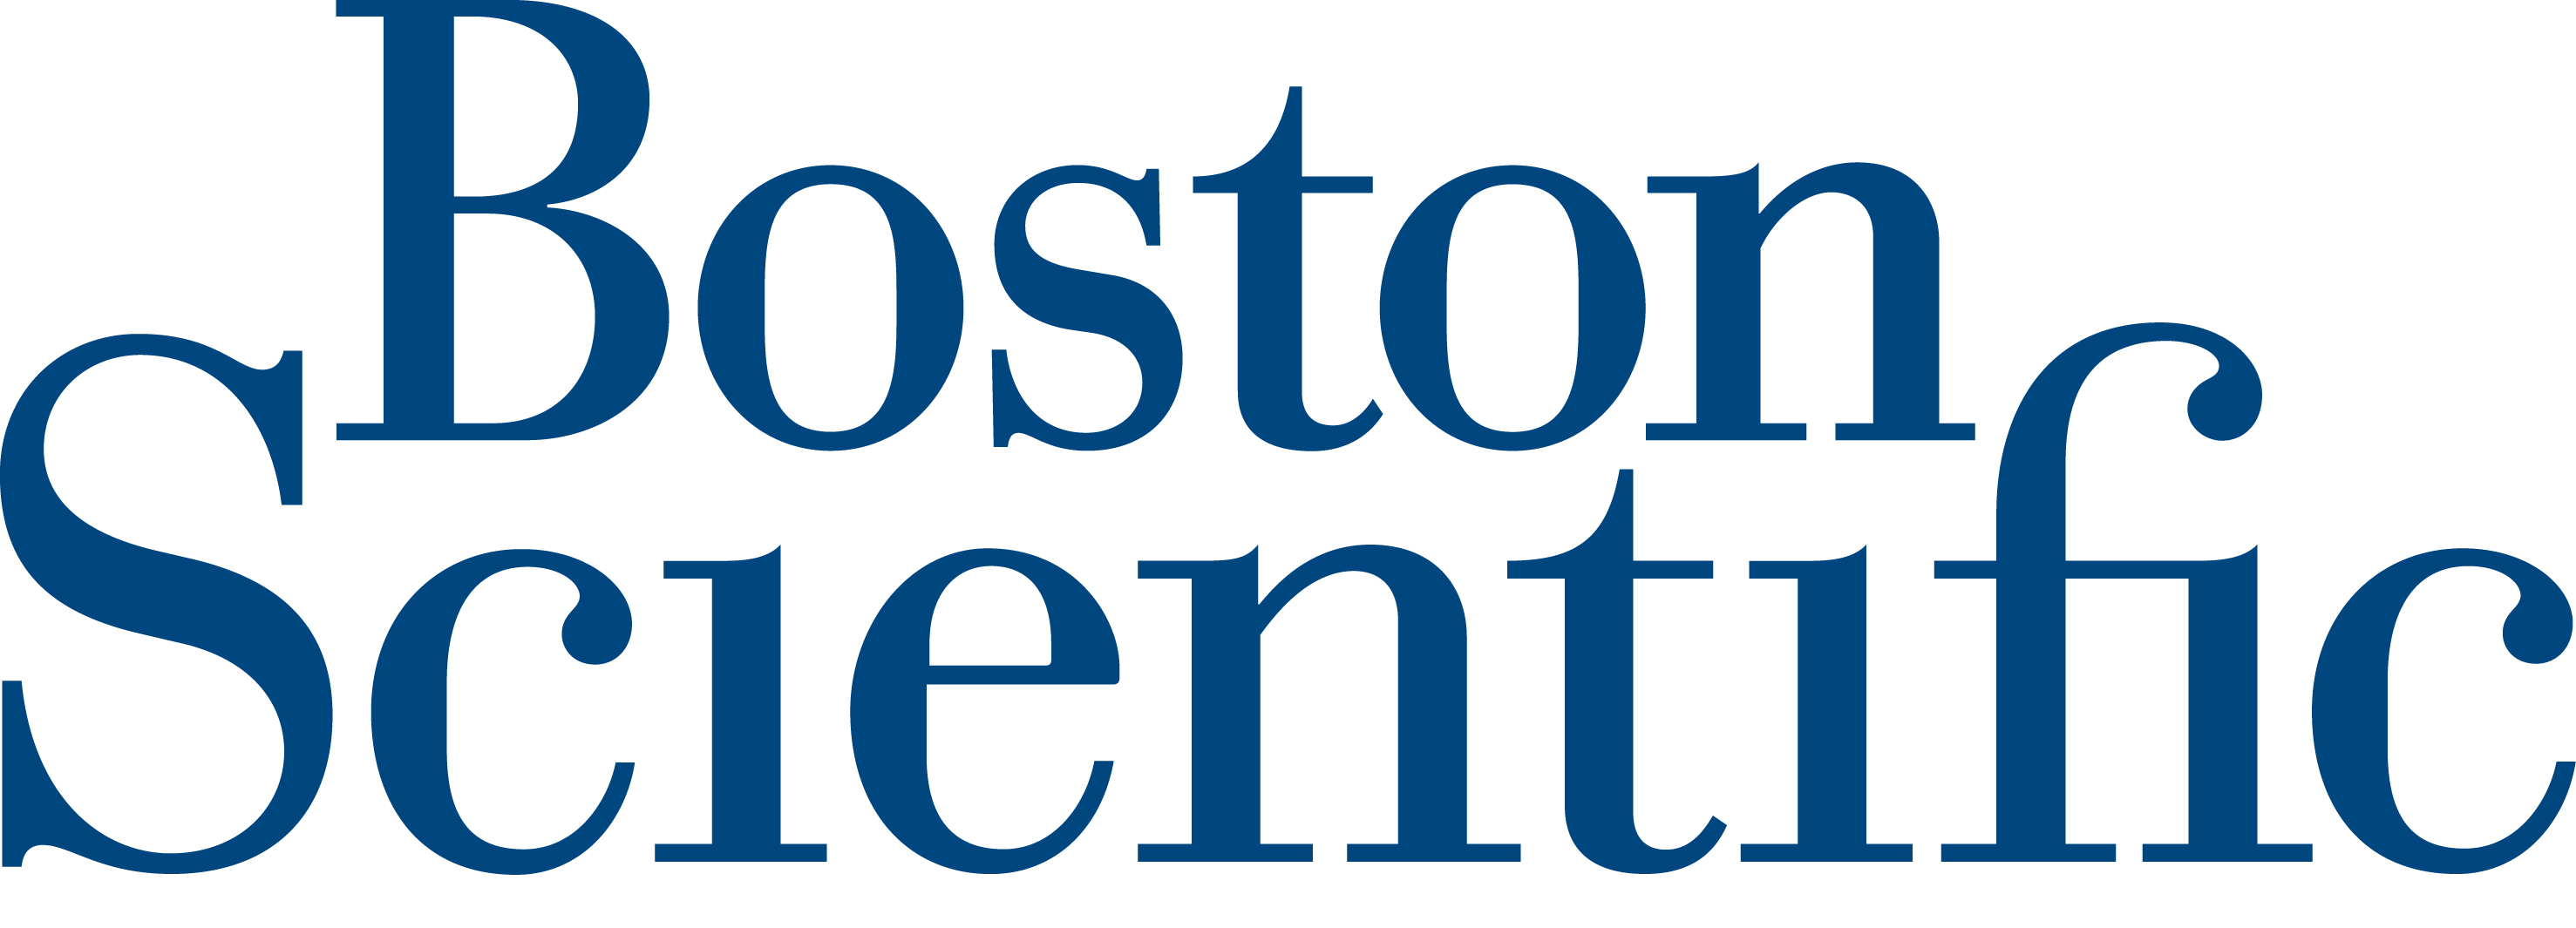 Medical - Boston Scientific